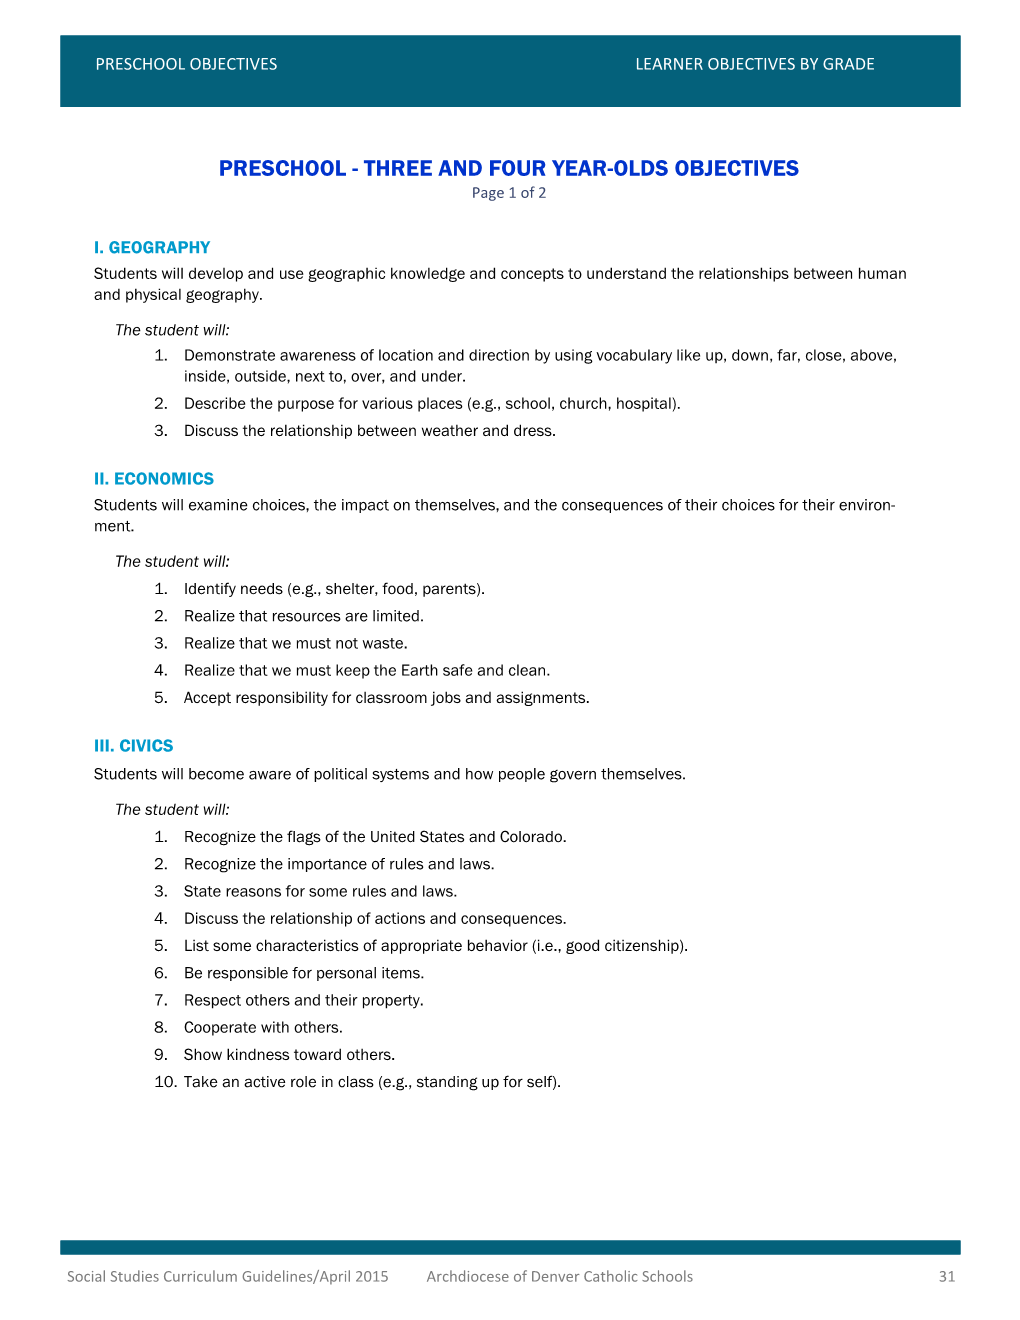 Social Studies Curriculum Guidelines April 2015 Guidelines